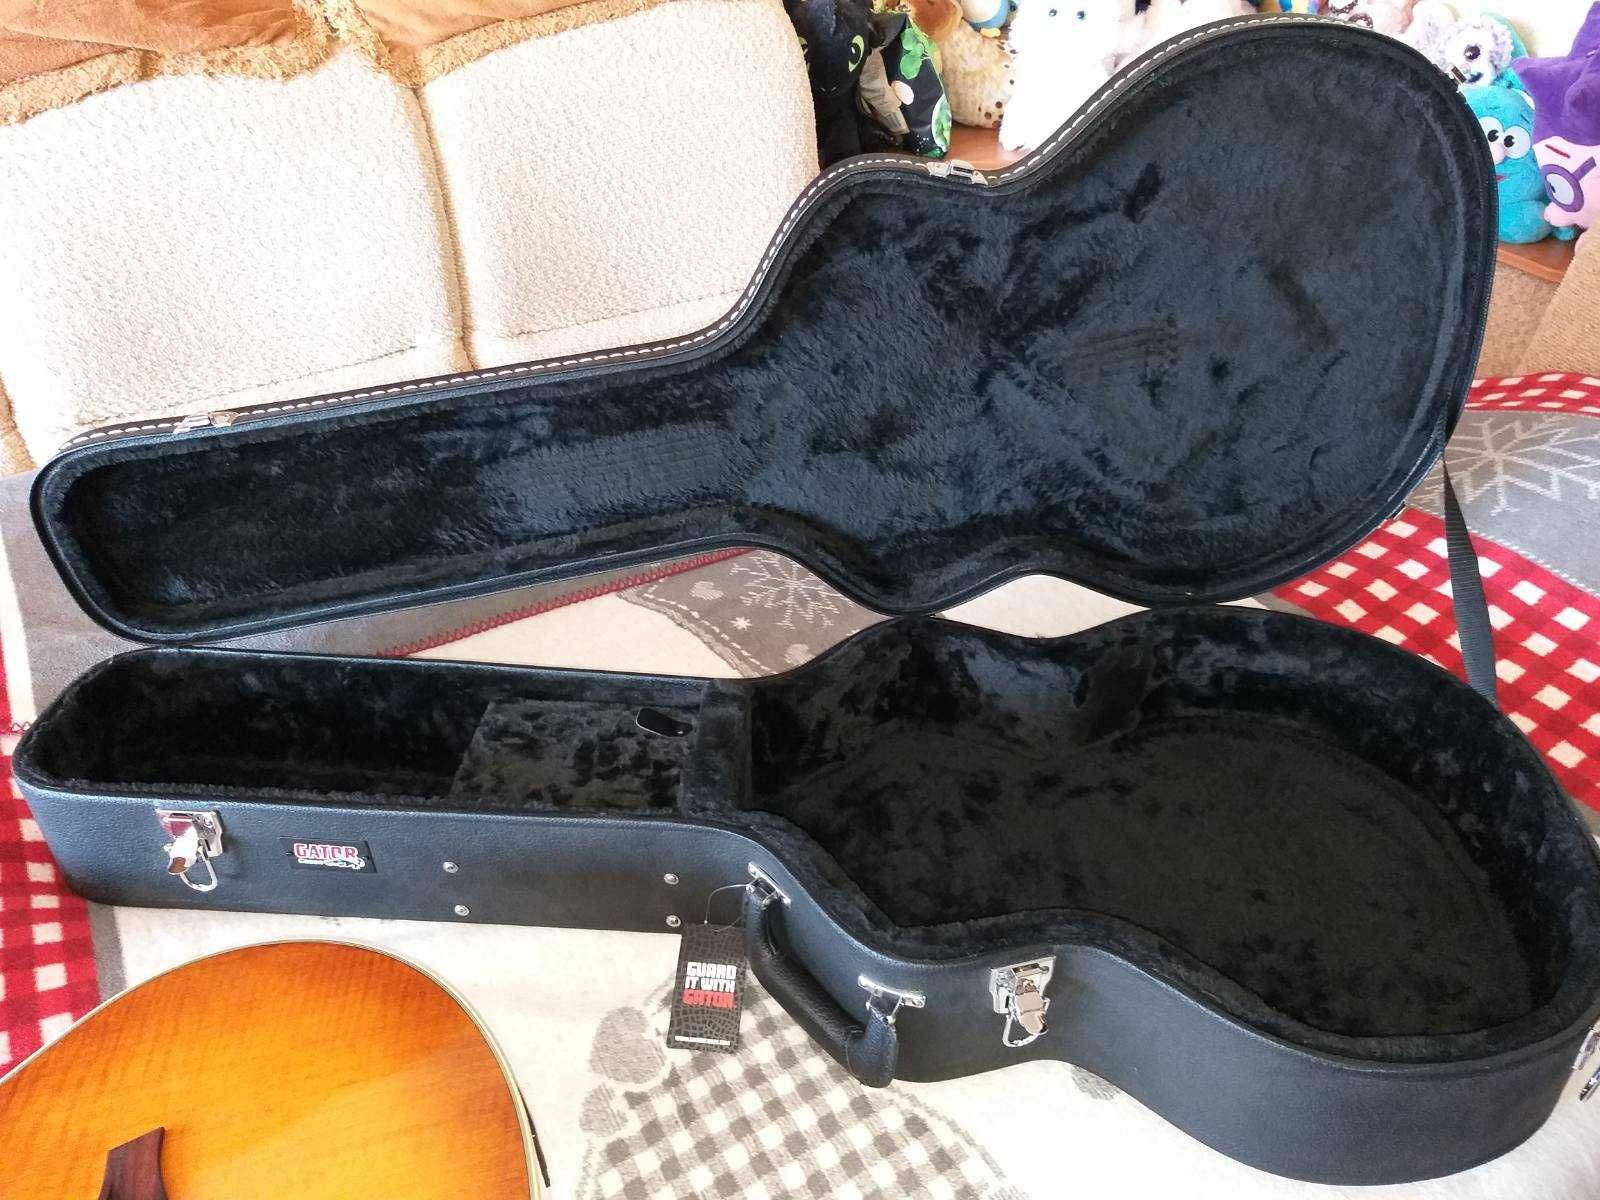 Акустическая гитара Ibanez AEL20E VV1202 + кейс.